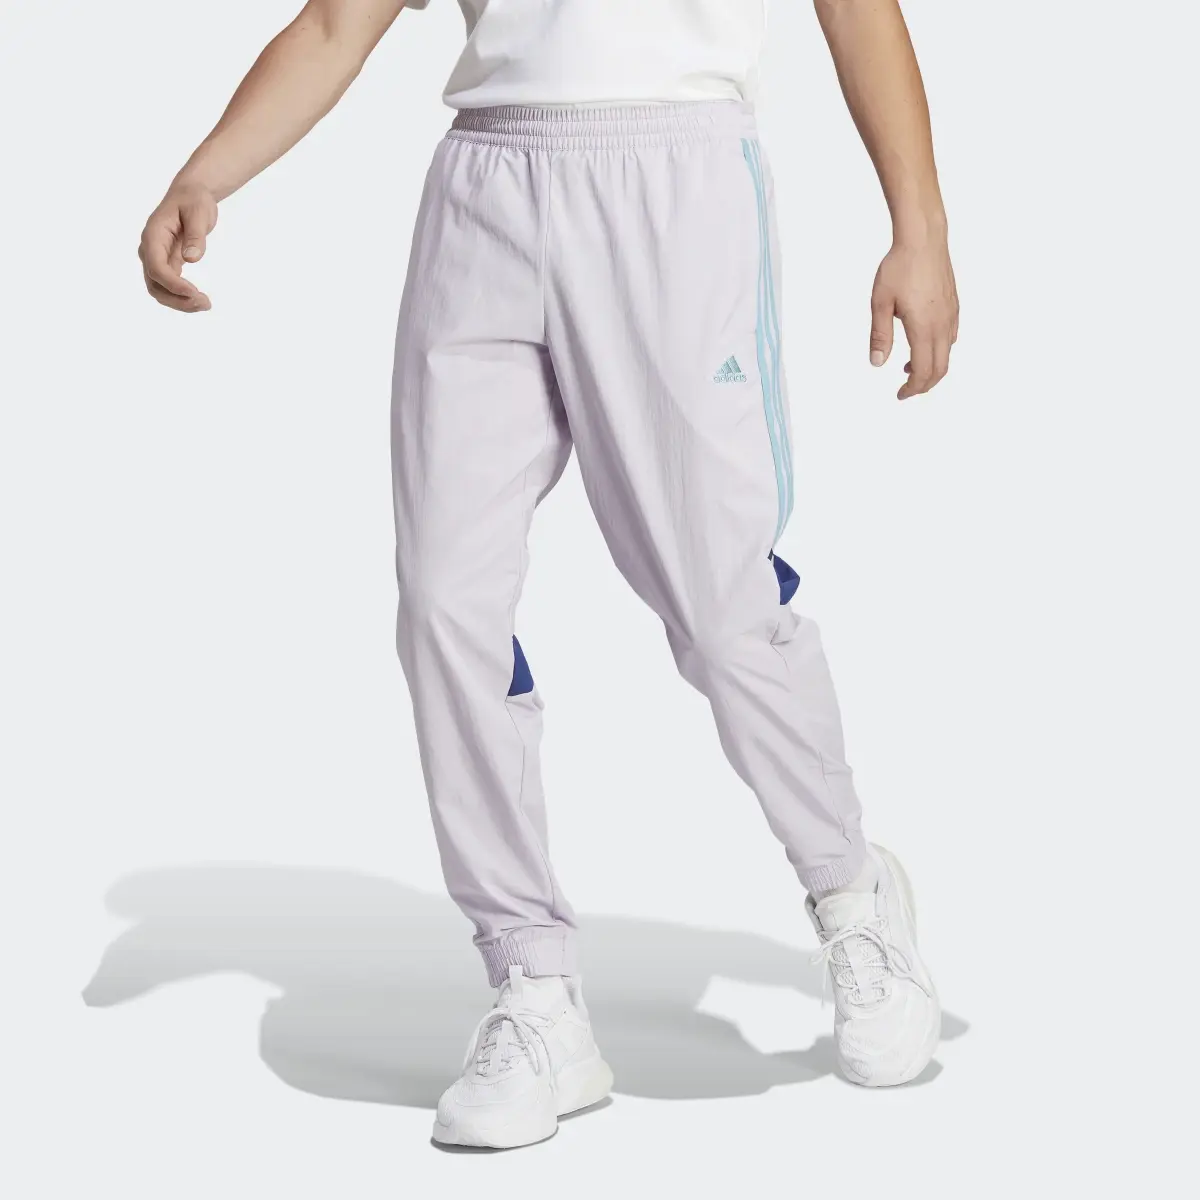 Adidas Tiro Pants. 1